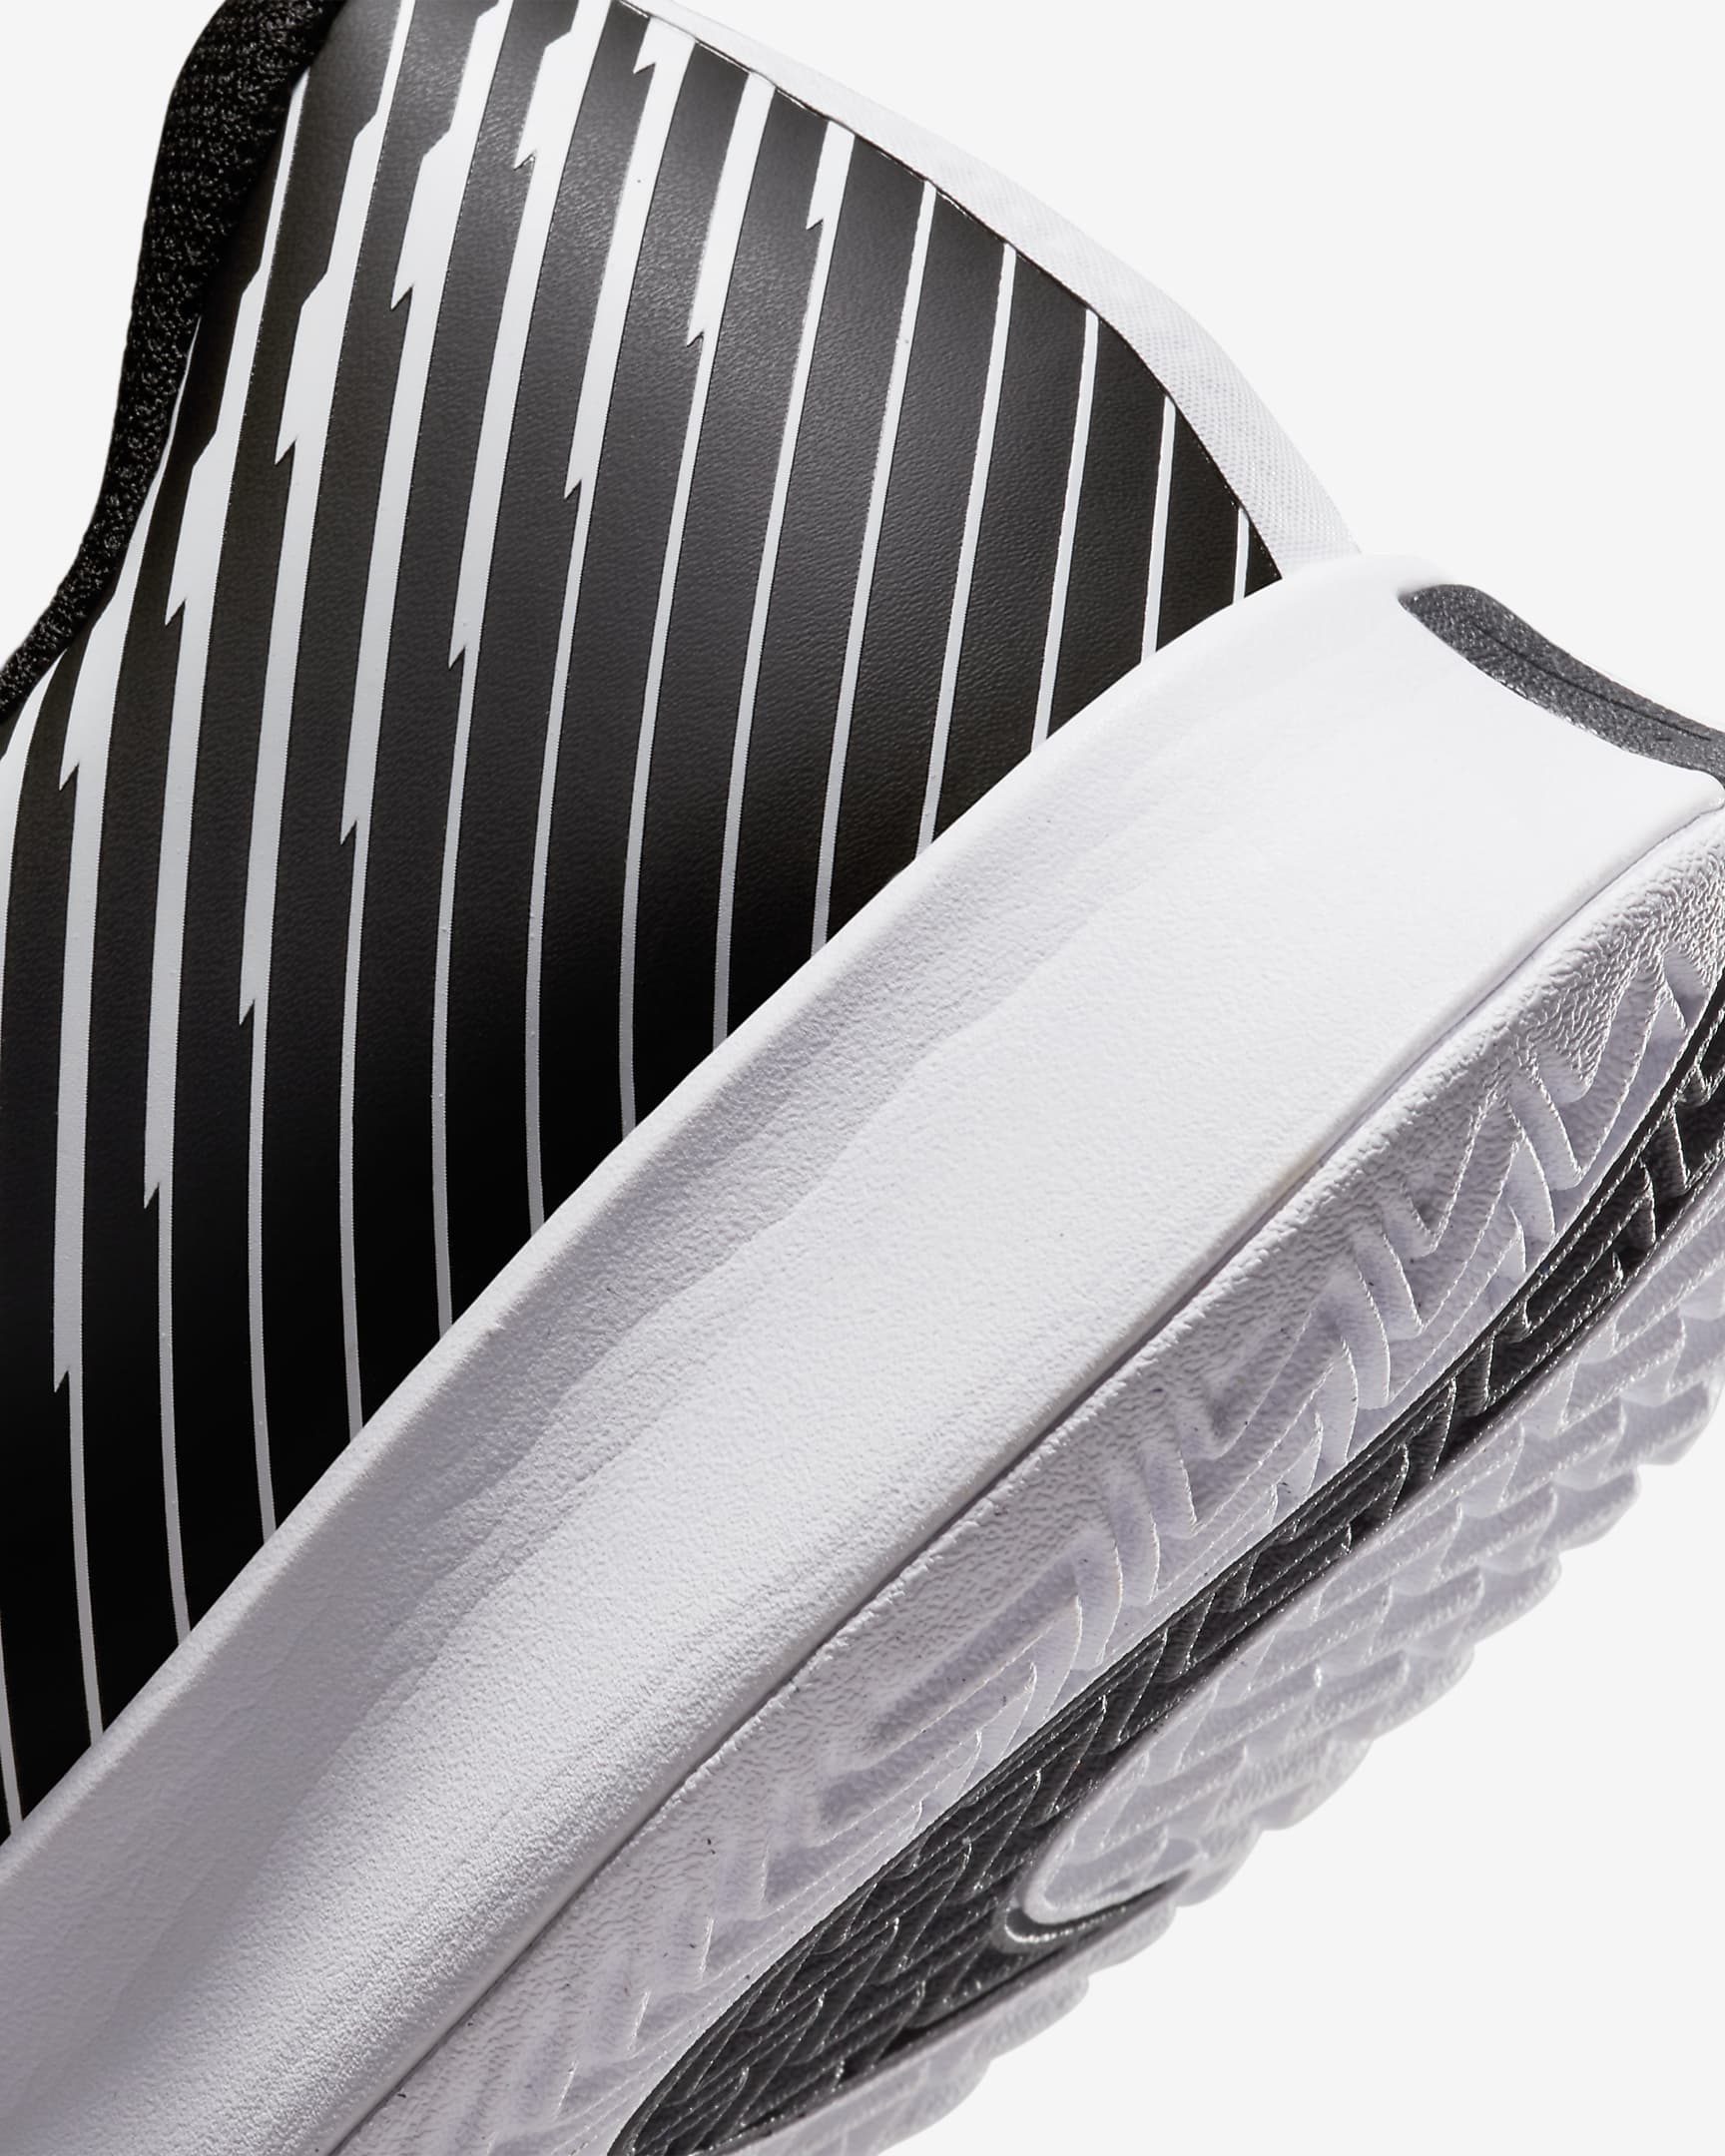 NikeCourt Air Zoom Vapor Pro 2 Men's Clay Tennis Shoes - Black/White